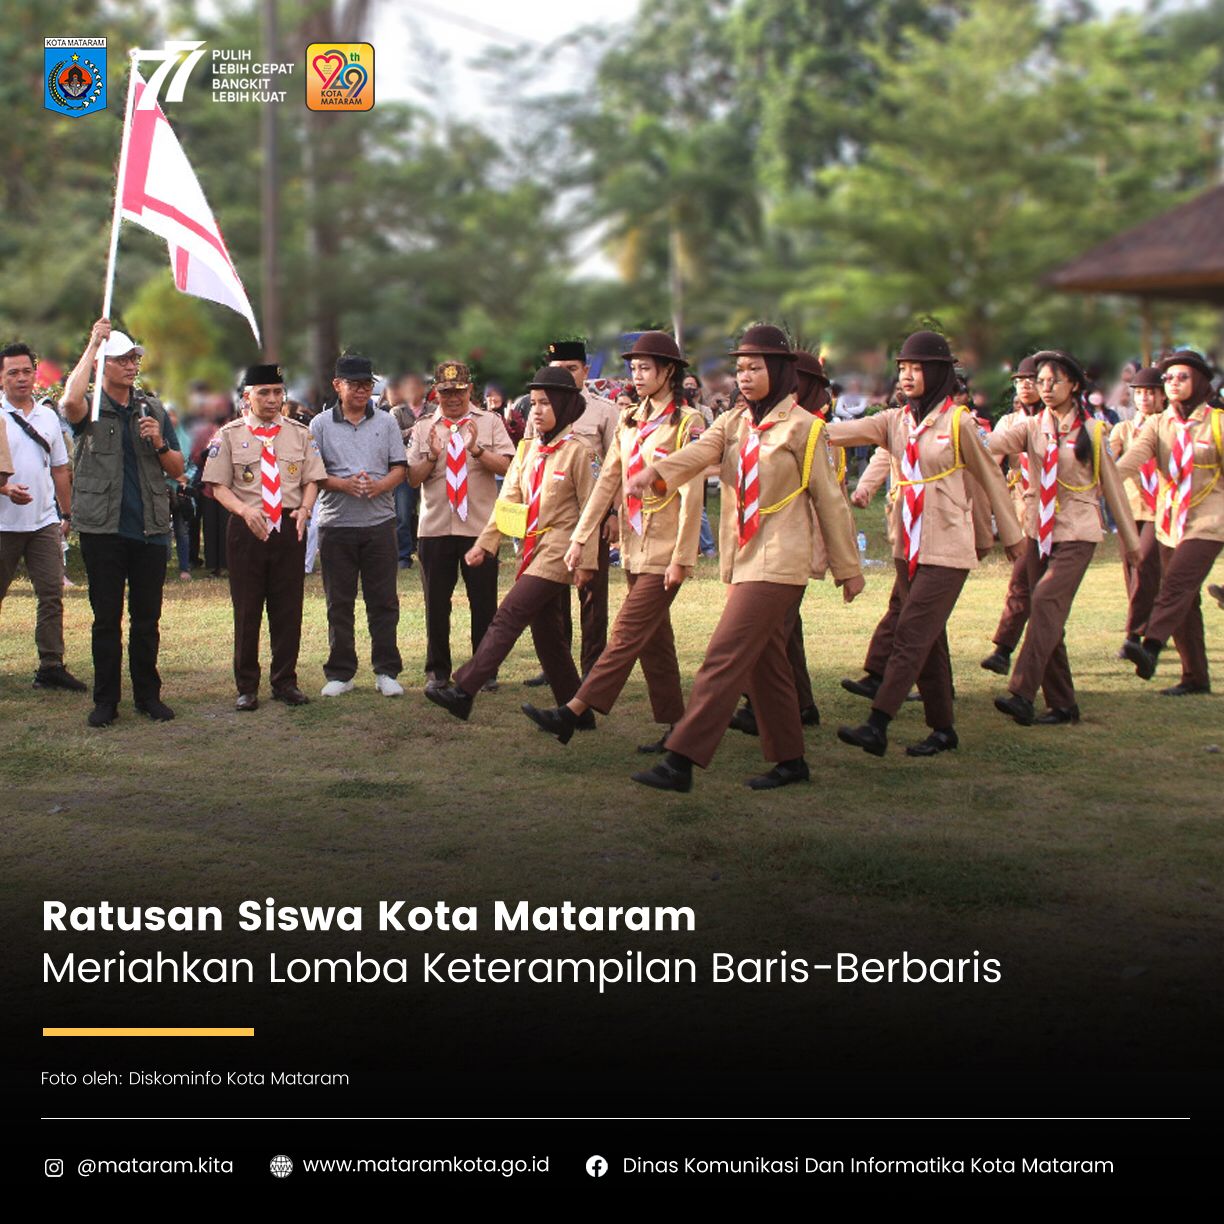 Ratusan Siswa Kota Mataram meriahkan Lomba Keterampilan Baris-Berbaris.